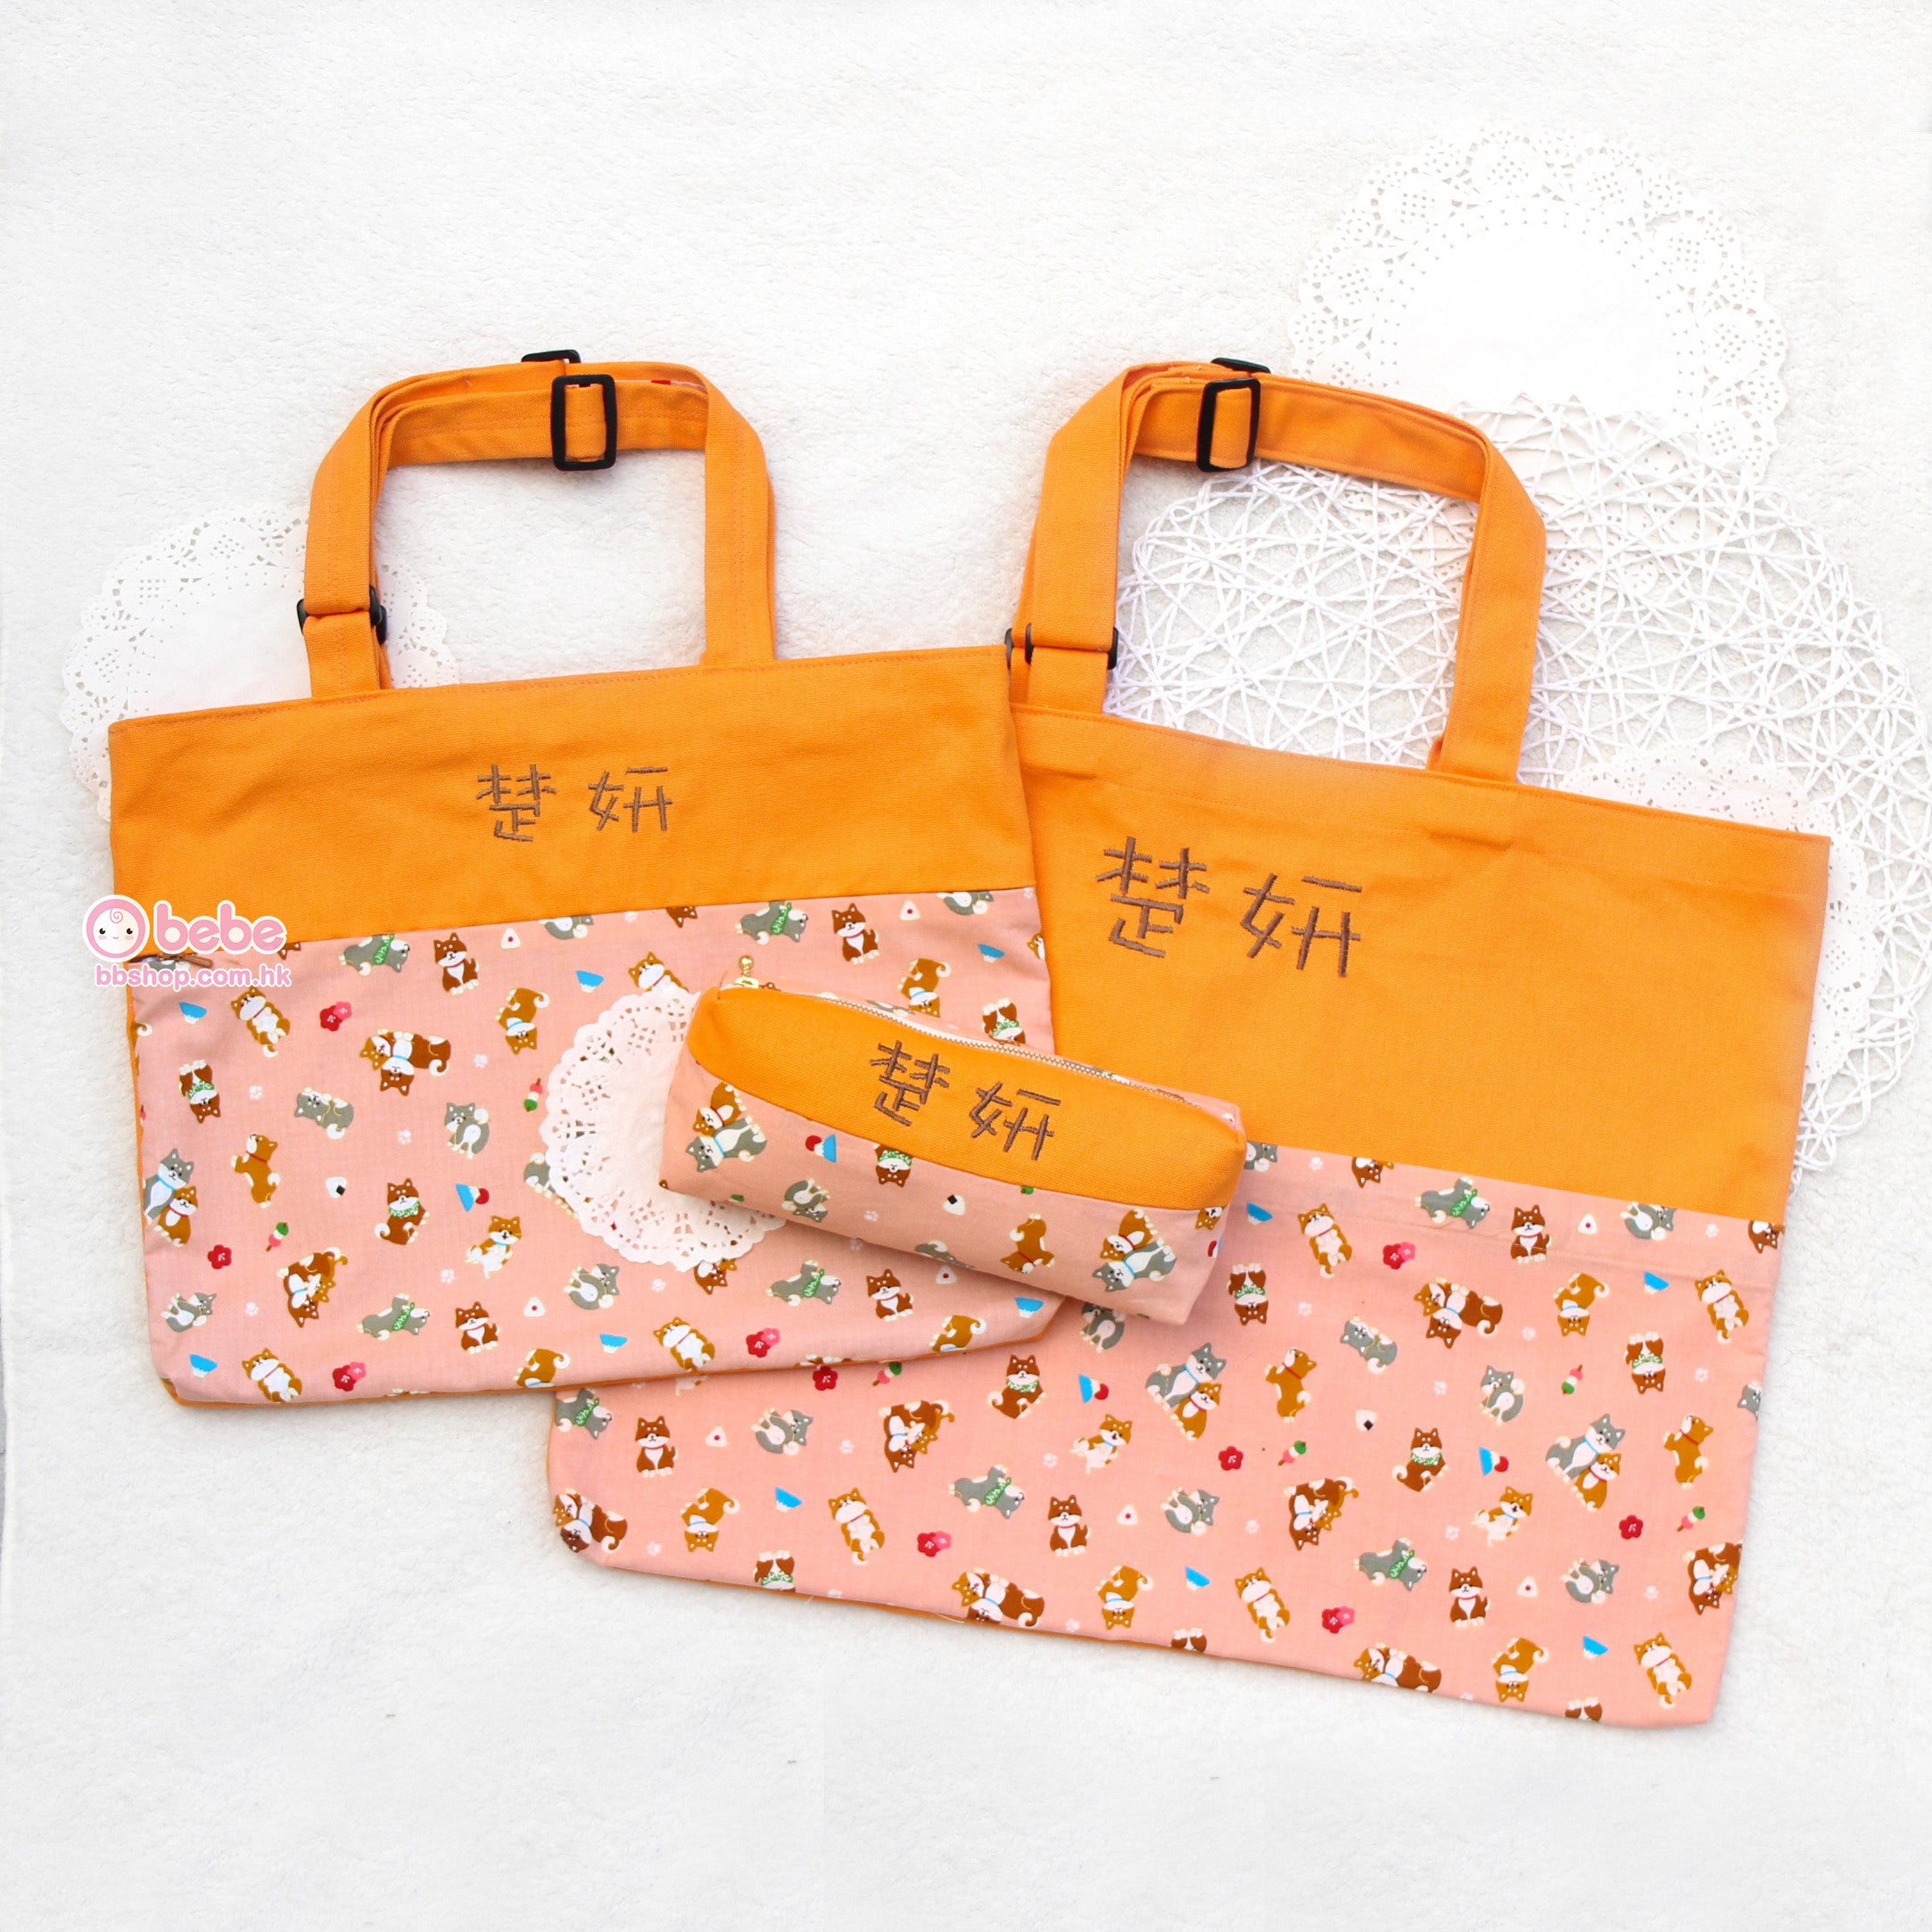 GS741 Gift Set - 粉橙色柴犬A4功課袋、畫板袋及筆袋禮物套裝 Peach Shiba Inu Painting Bag, A4 Homework Bag and Pencil Bag Gift Set